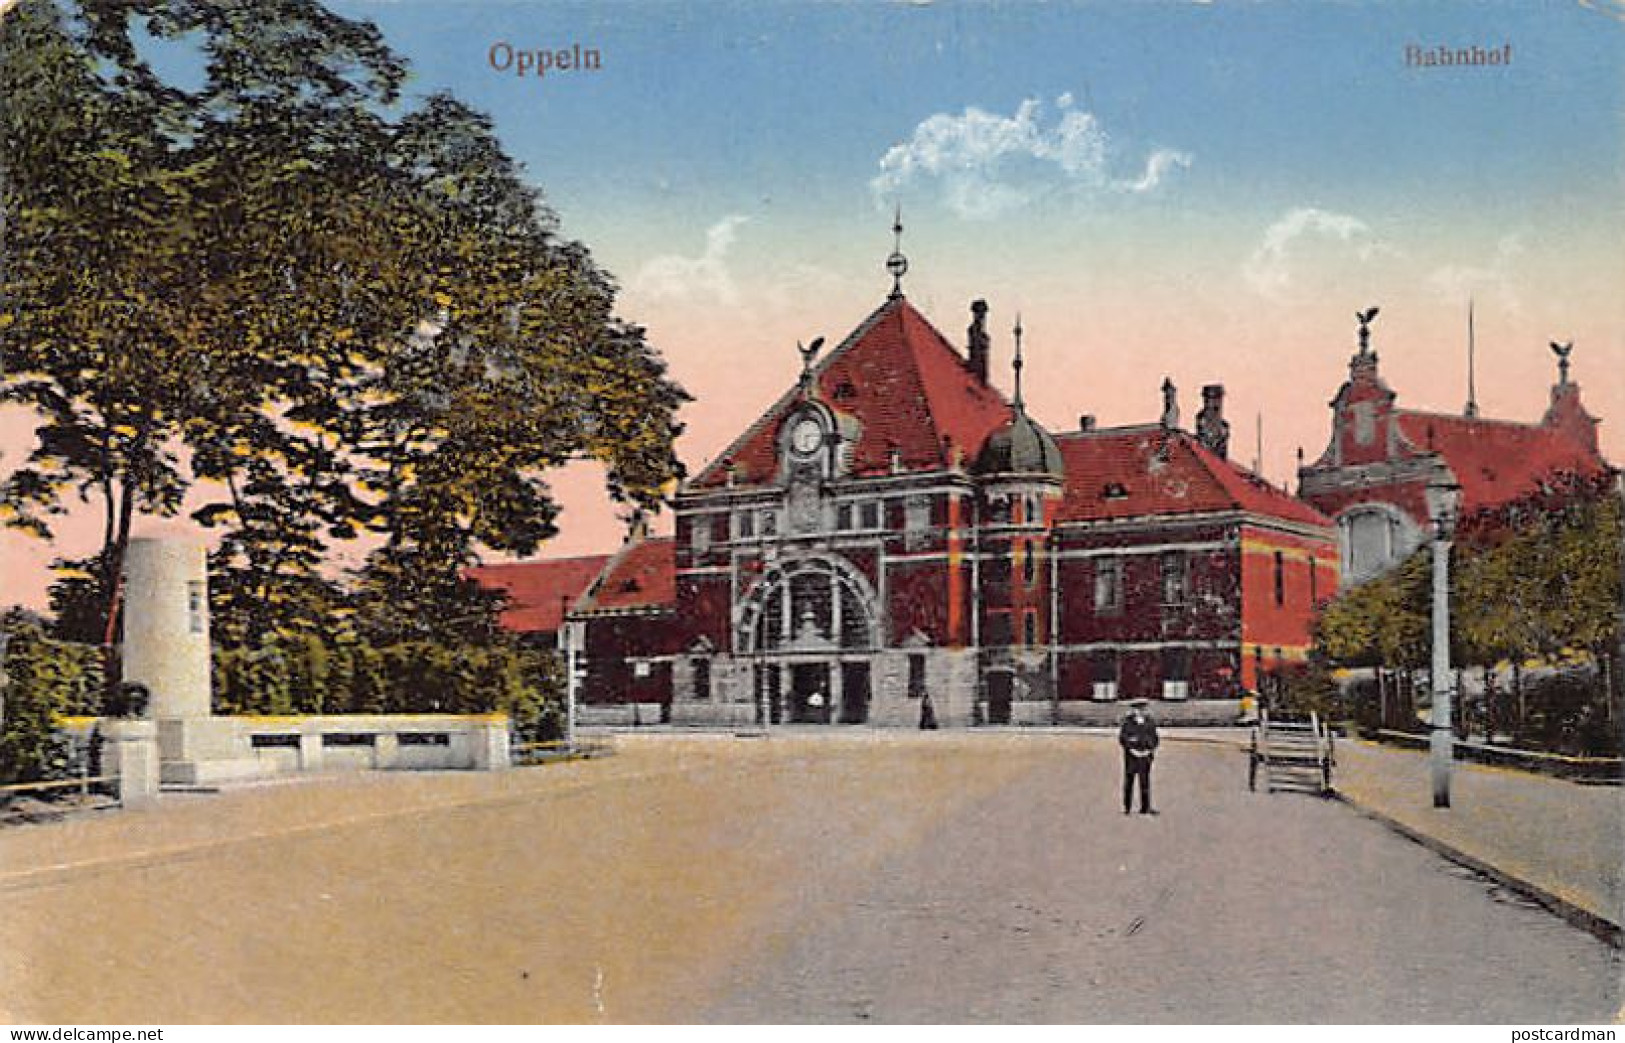 Poland - OPOLE Oppeln - Bahnhof - Publ. Bruno Scholz - Poland